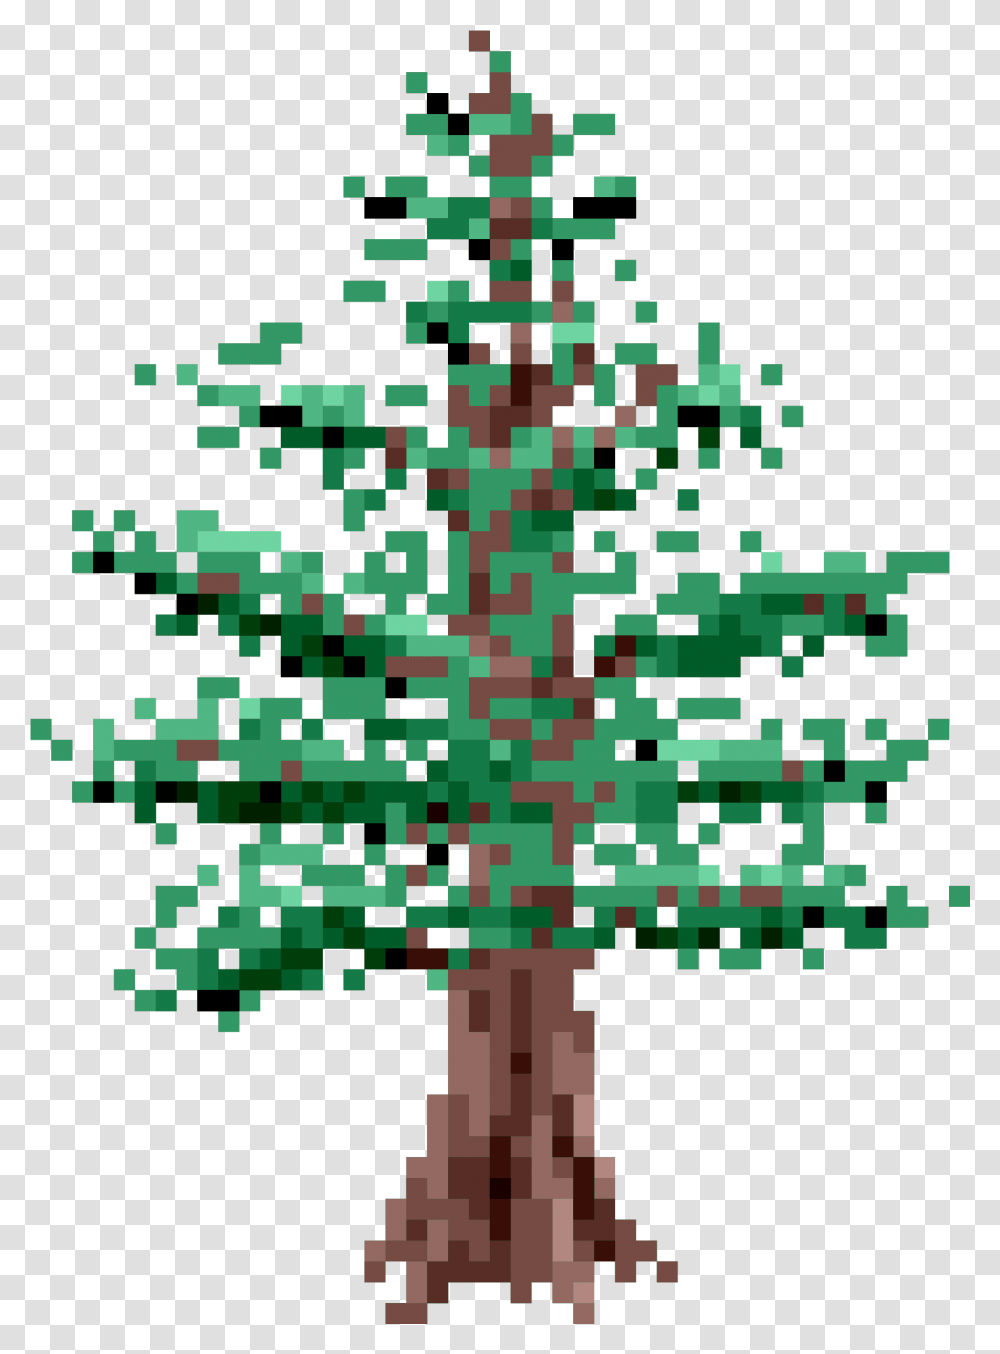 Pine Trees 8 Bit Pine Tree 8 Bit Tree Sprite Pixel Art Pine Tree, Pattern, Ornament, Poster, Advertisement Transparent Png